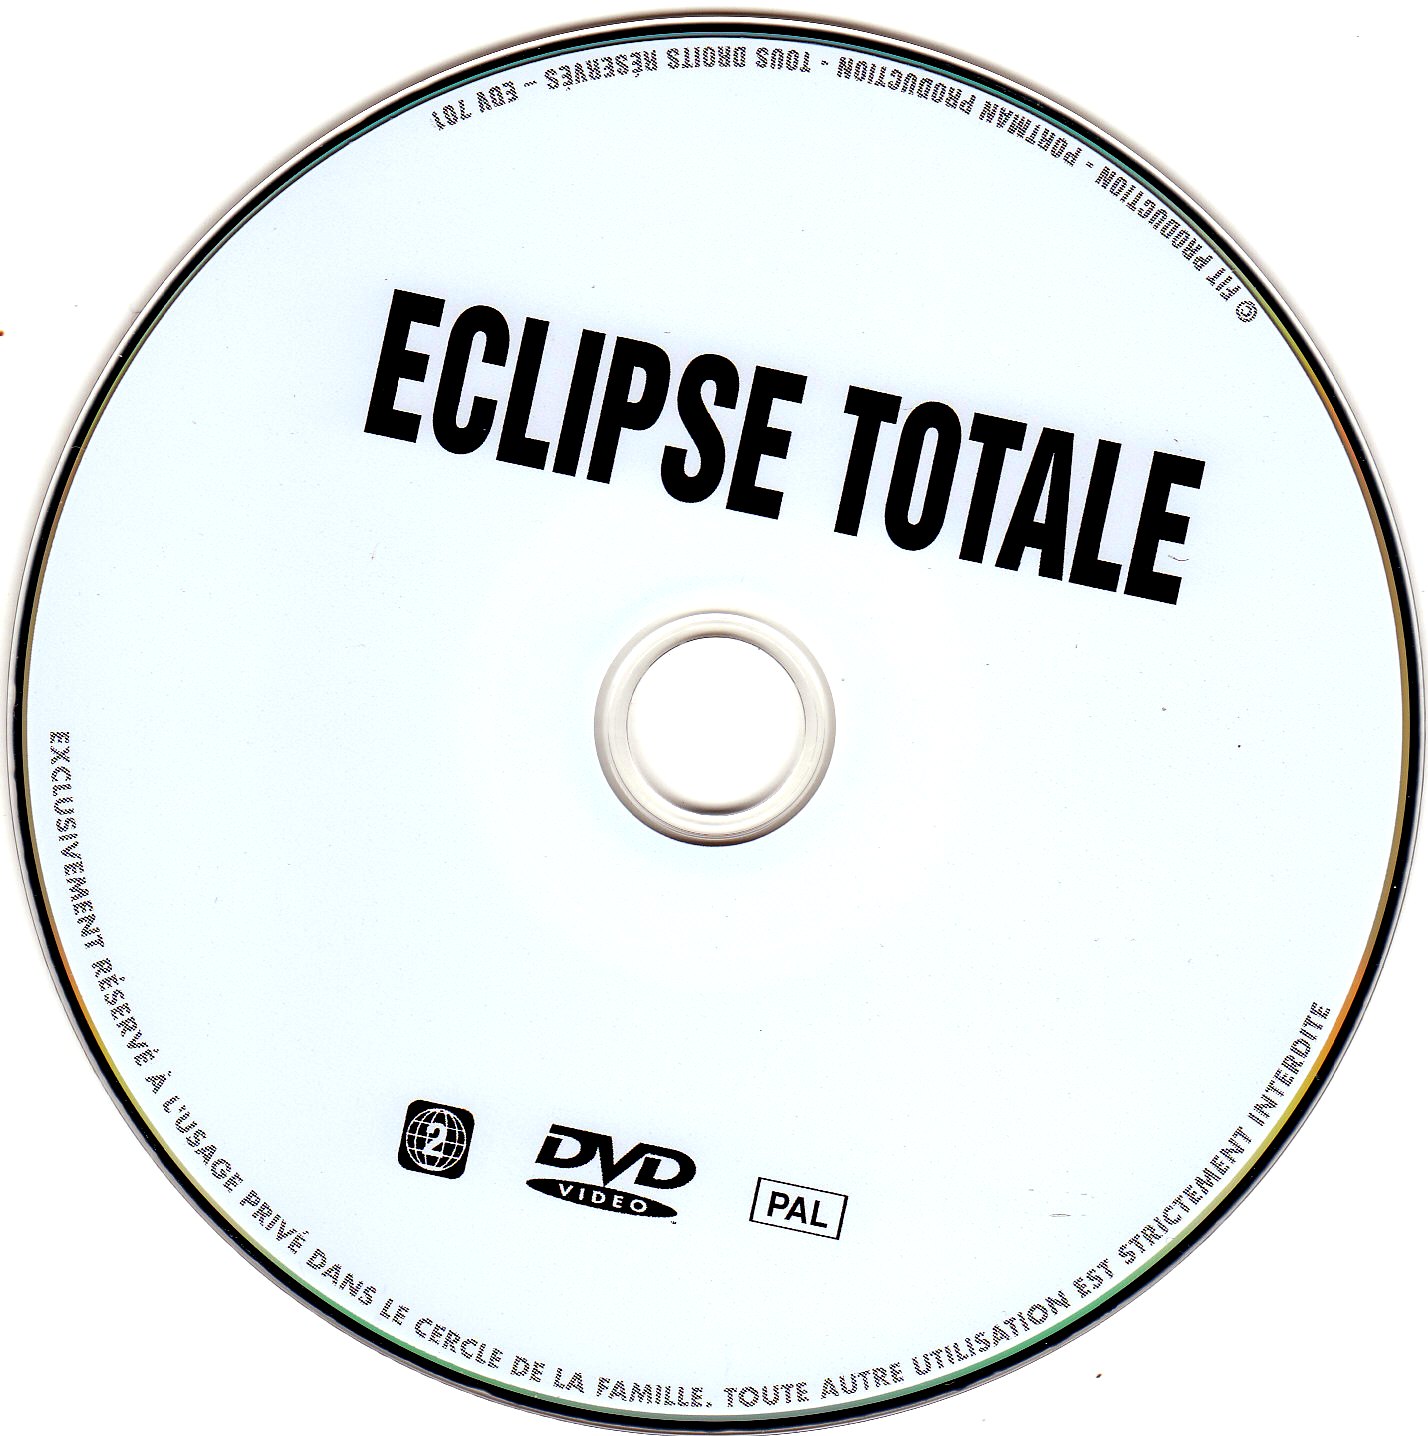 Eclipse totale